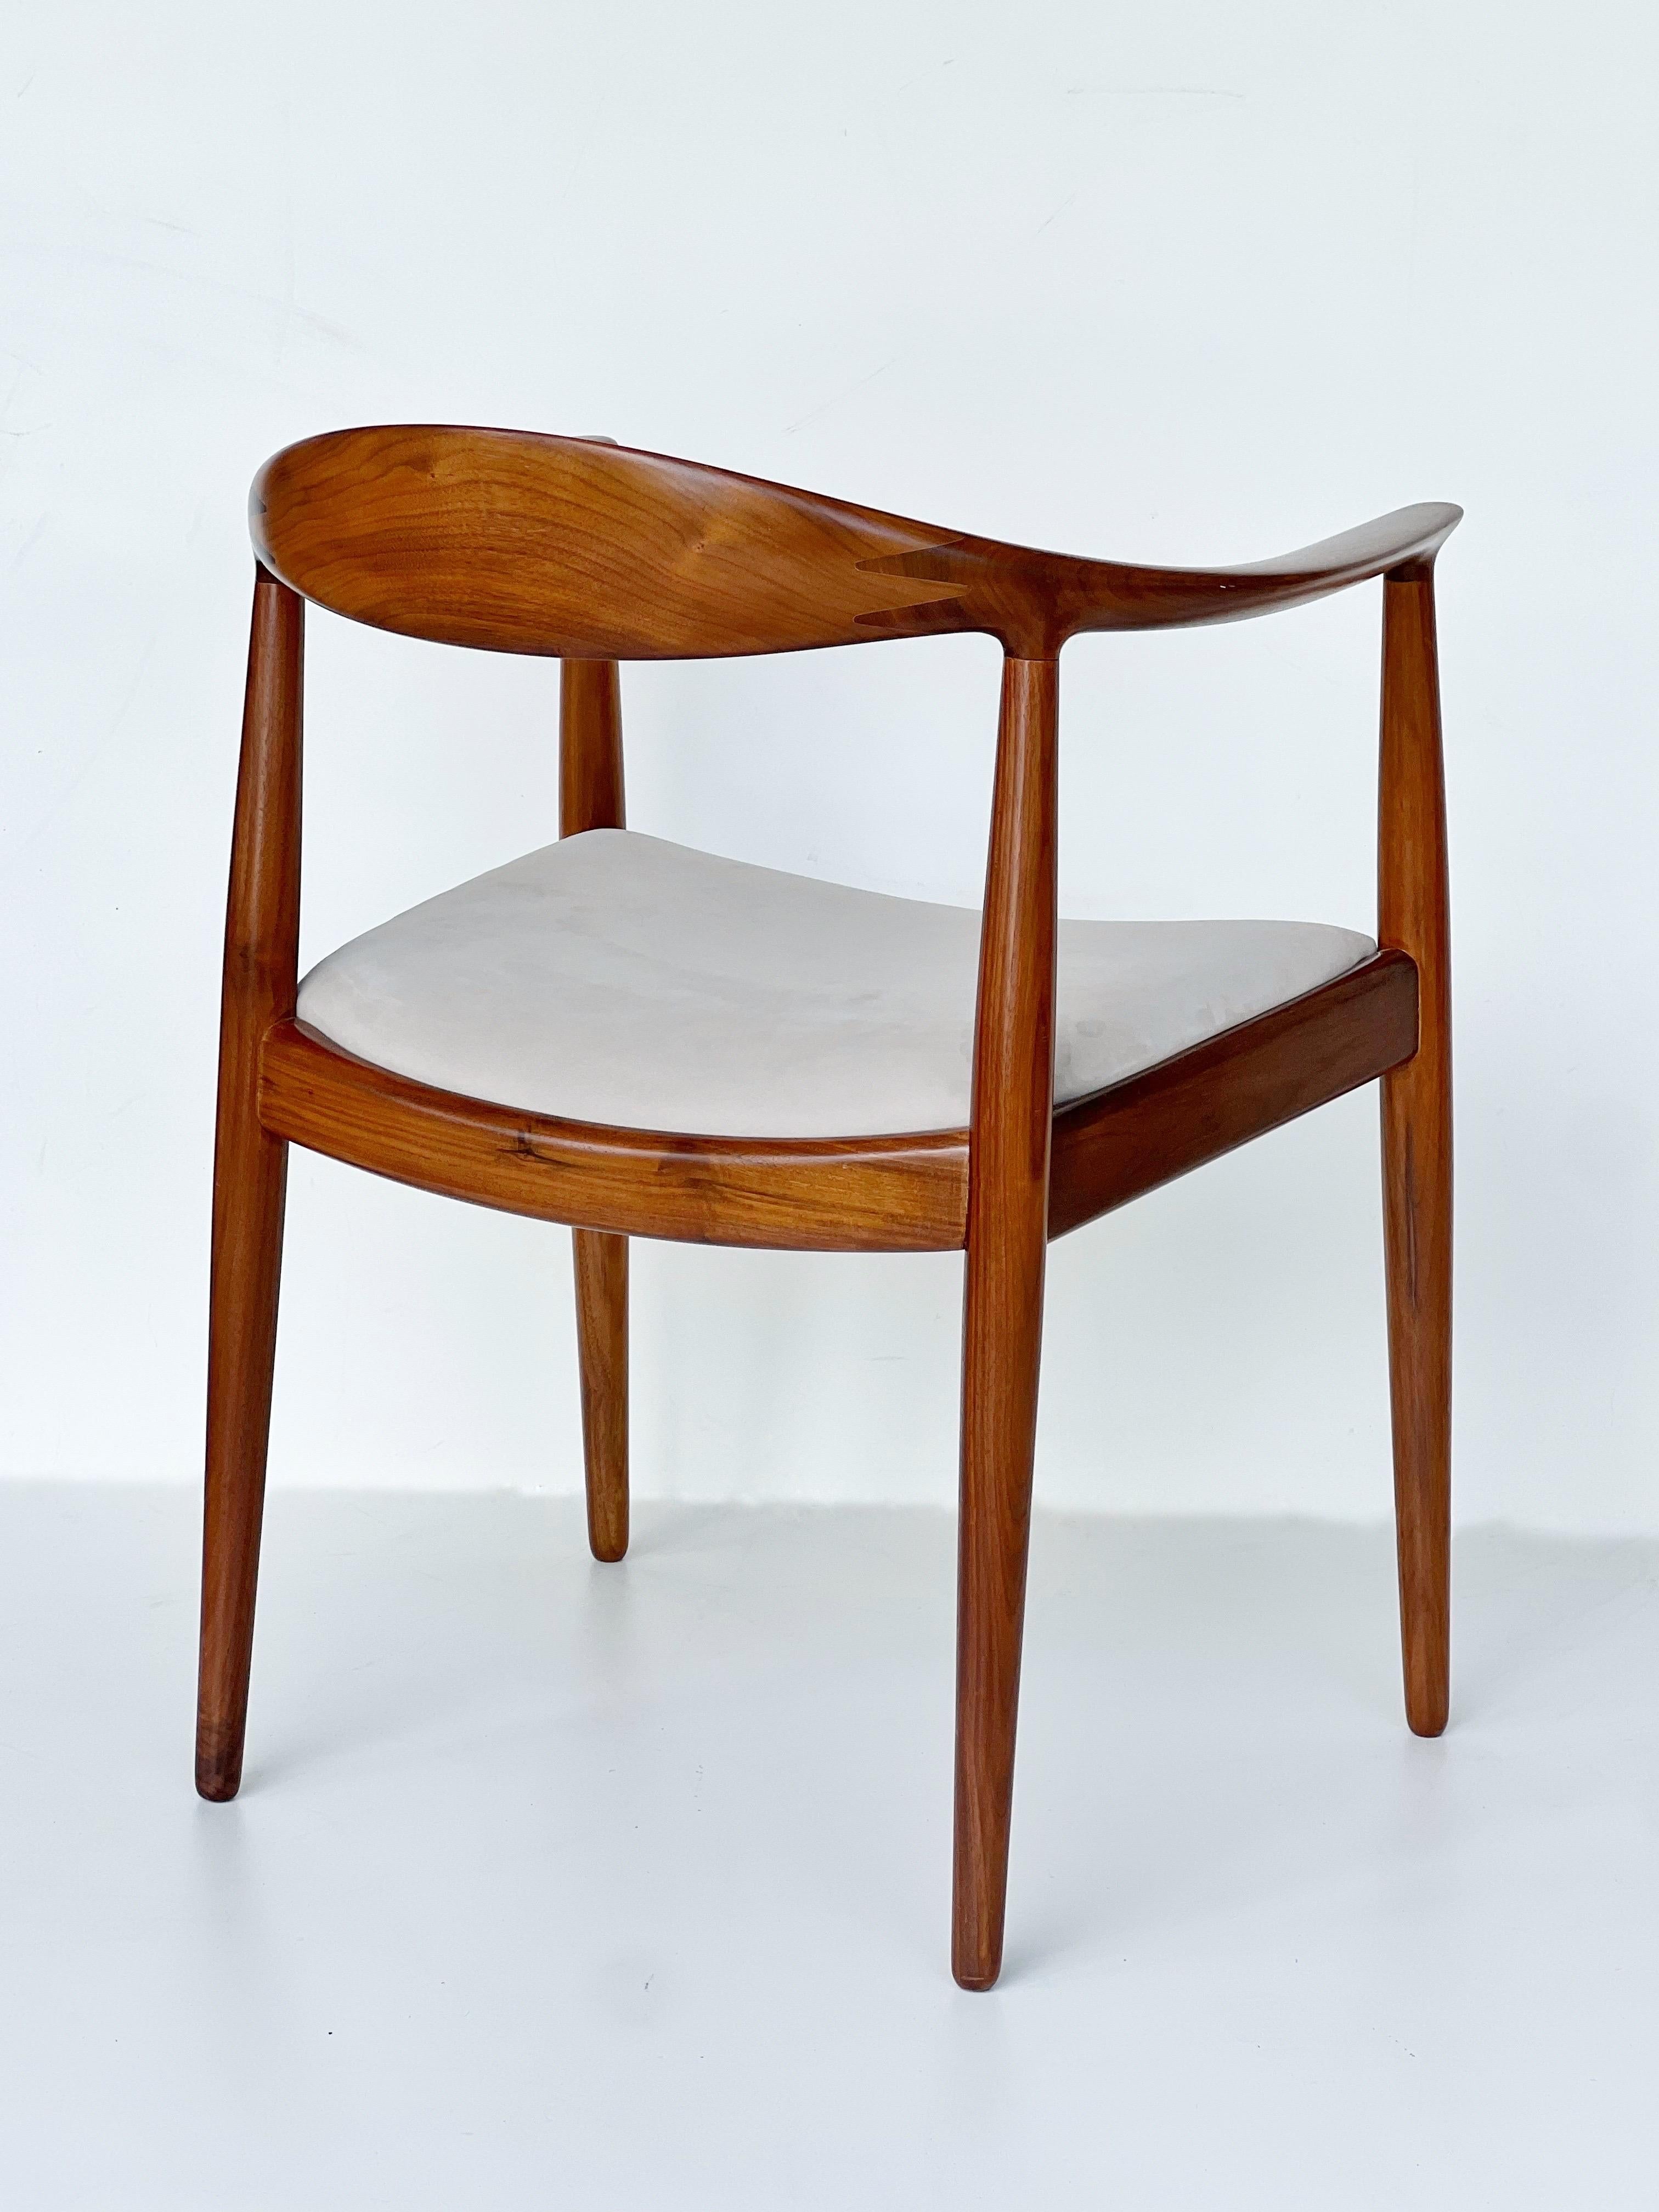 Mid-20th Century Hans Wegner The Chair Walnut Model JH503  by Johannes Hansen  2 Available For Sale